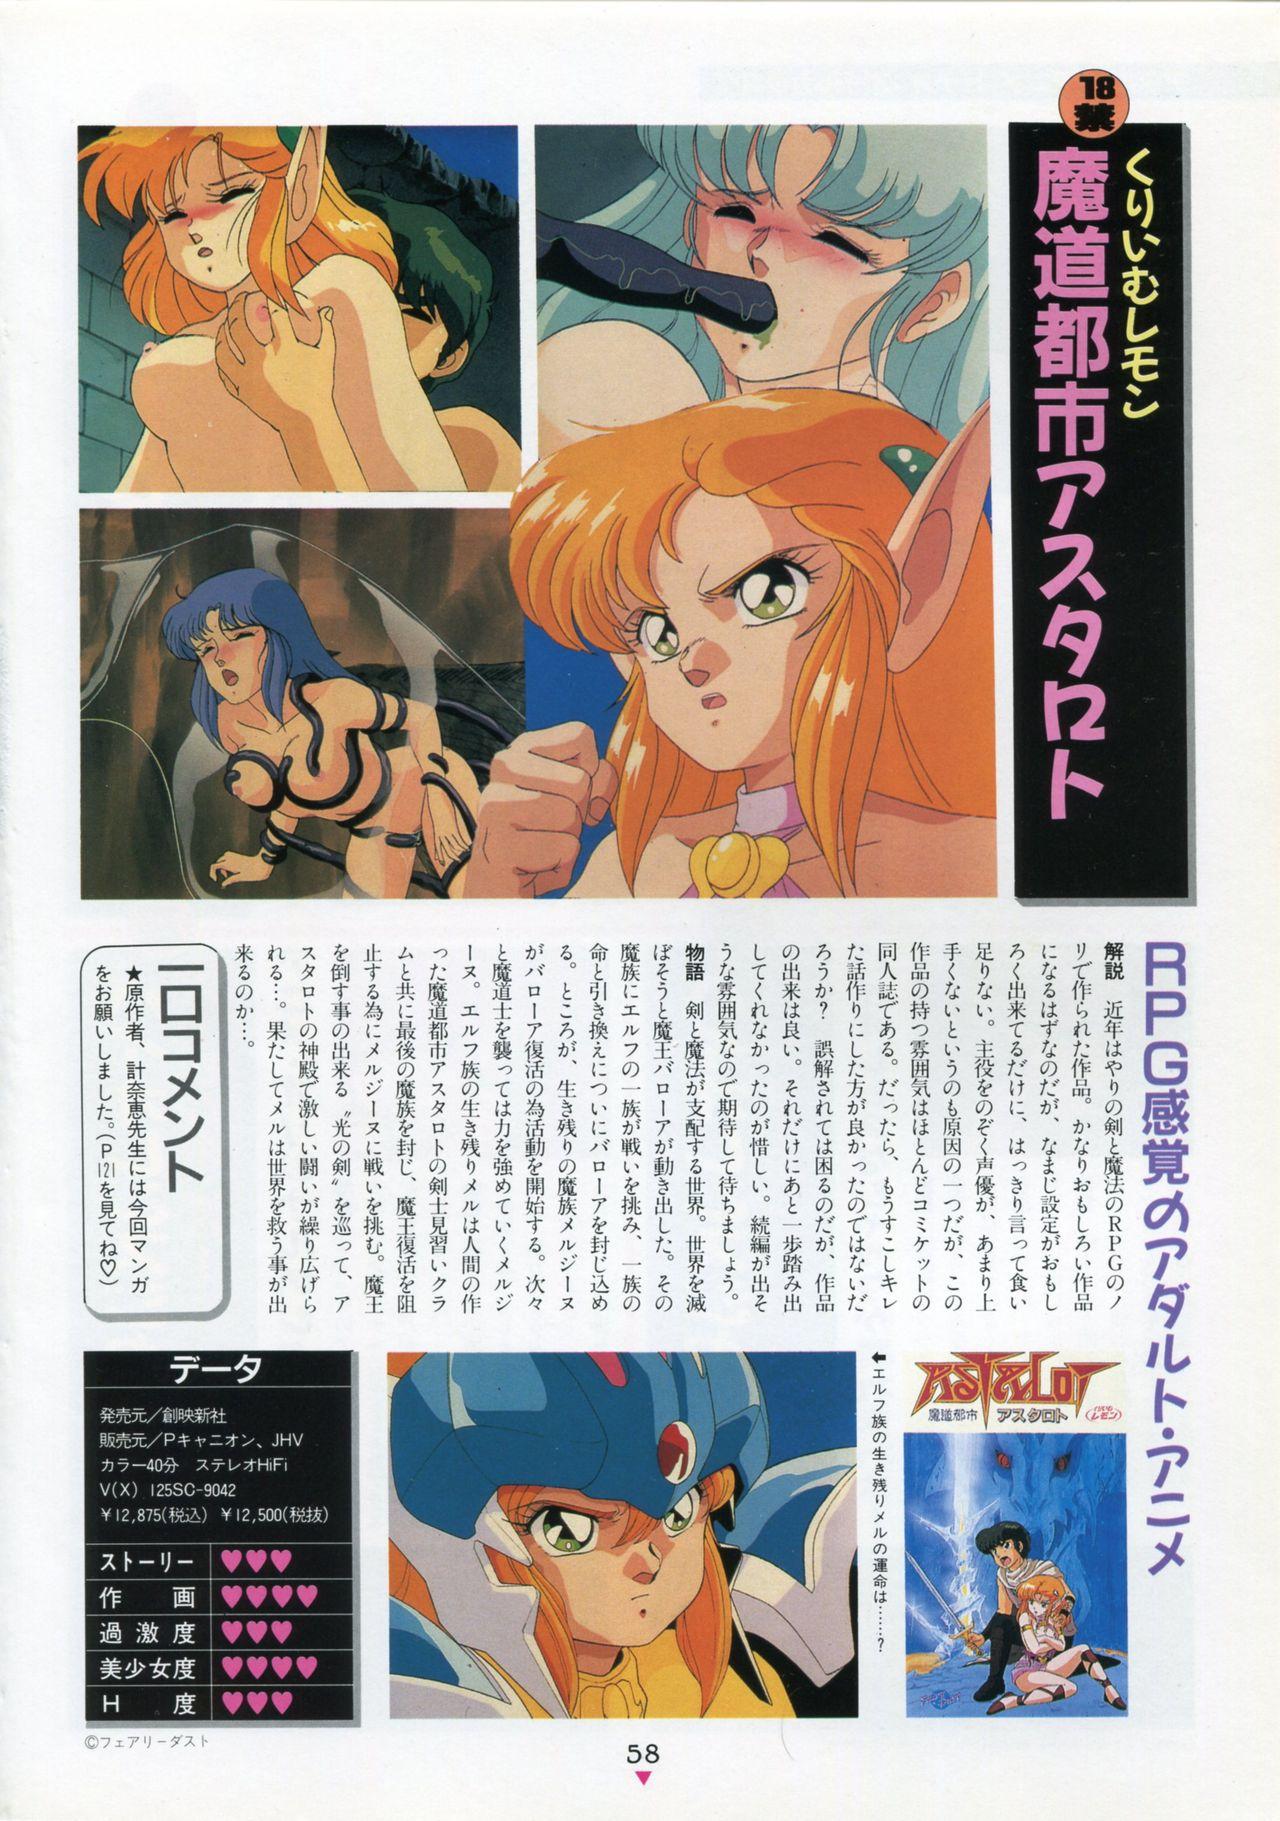 Bishoujo Anime Daizenshuu - Adult Animation Video Catalog 1991 53